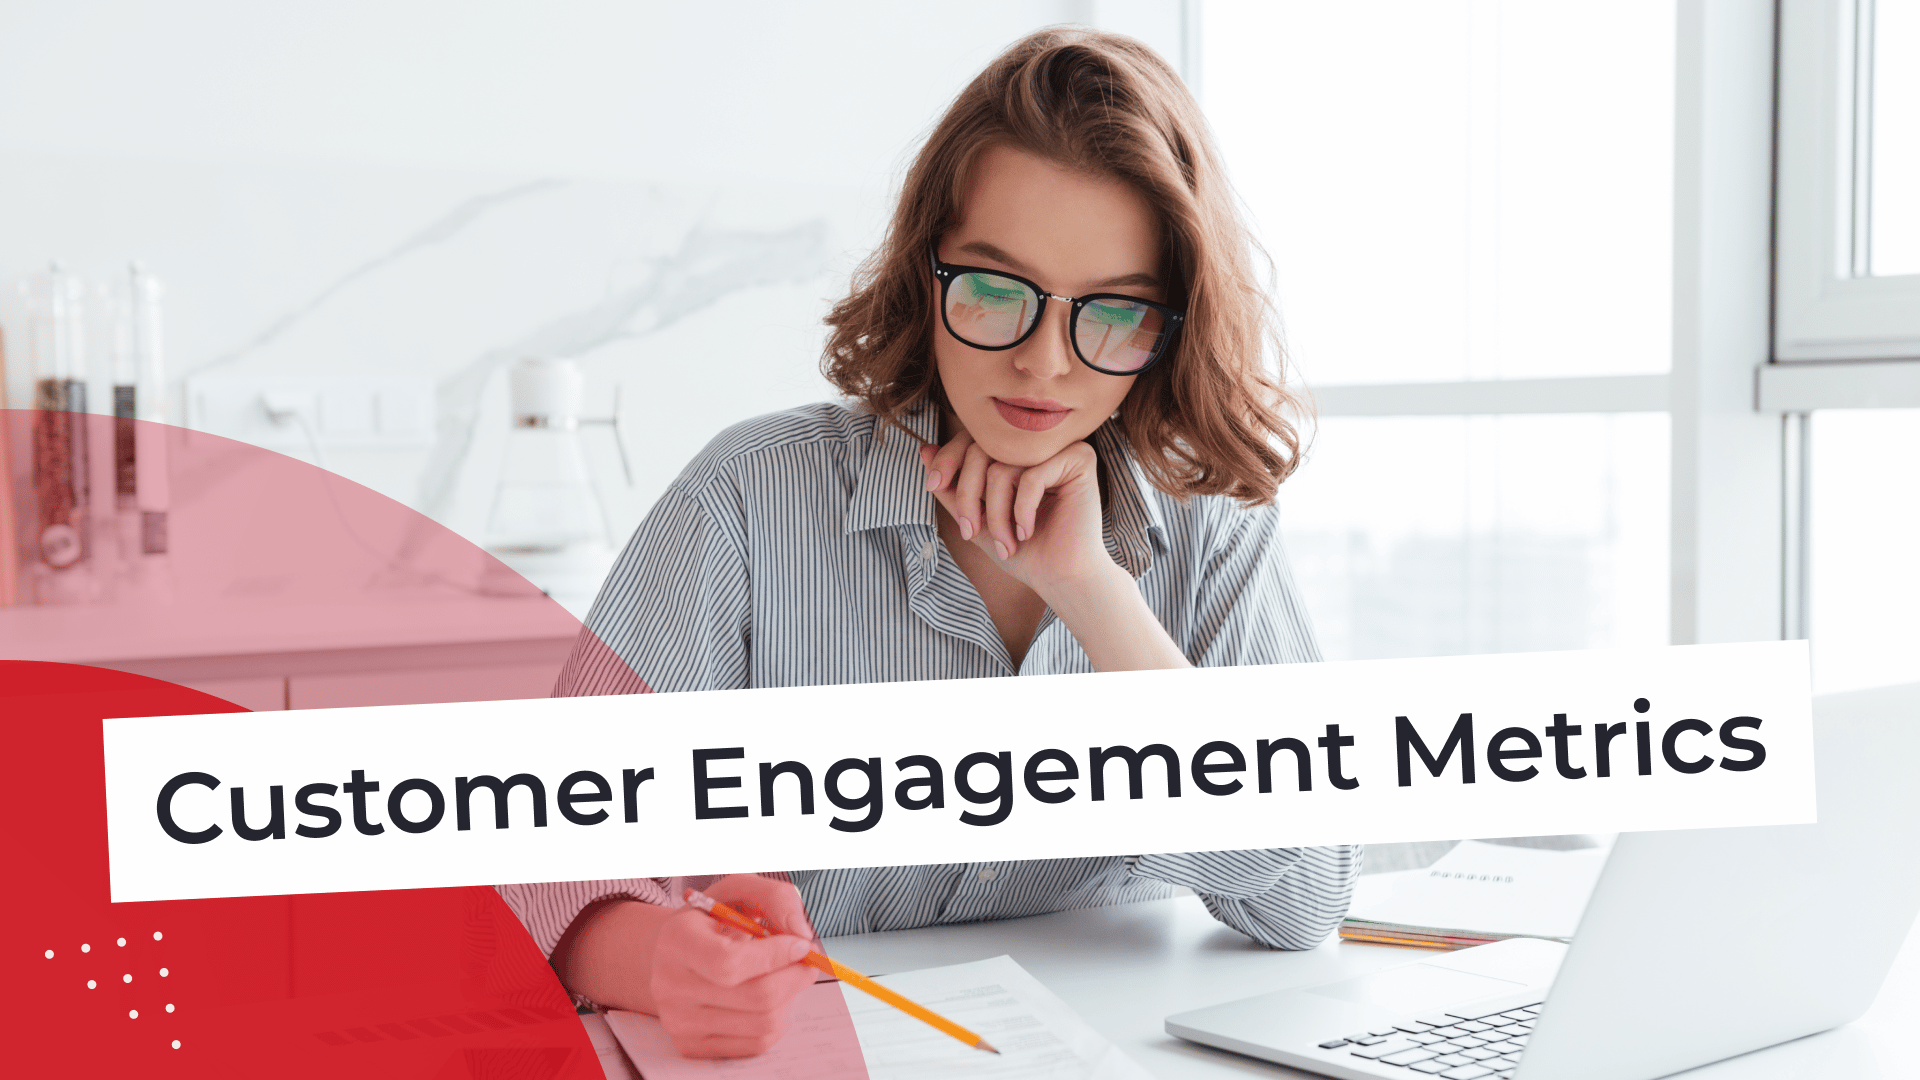 10 Customer Engagement Metrics to Track in 2022